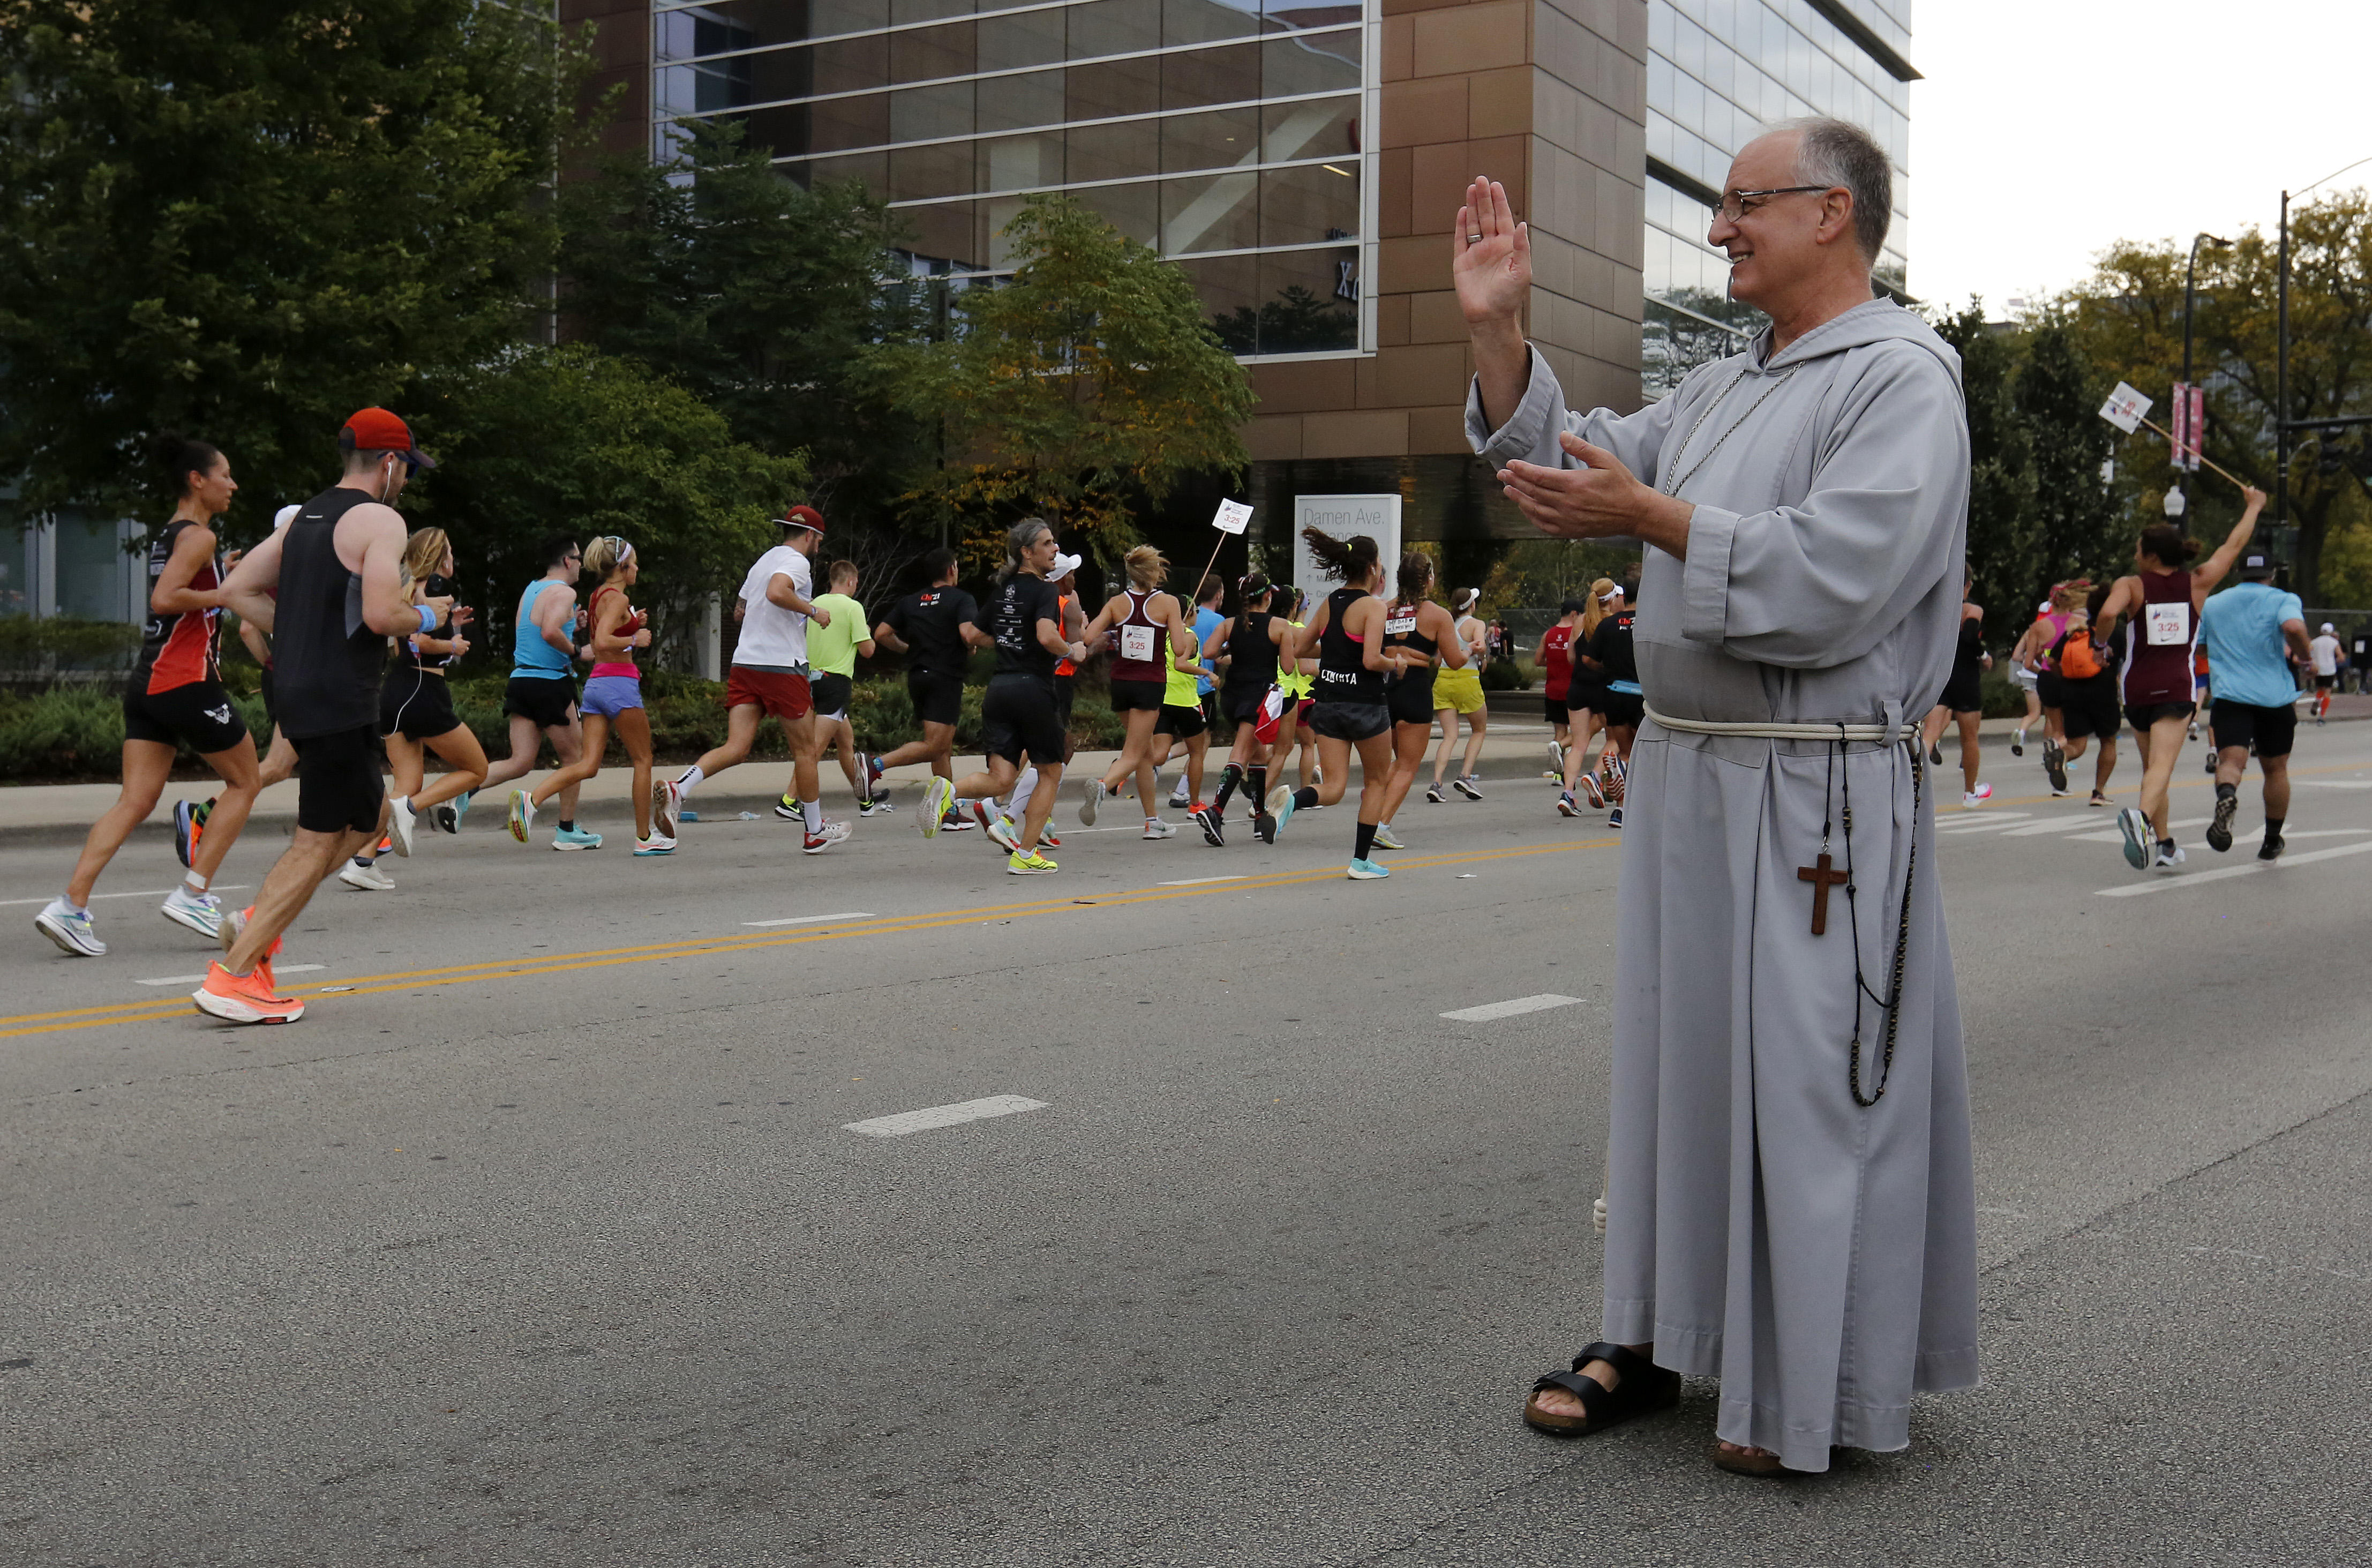 Bishop Bob blessing runners at the 2021 Chicago Marathon!